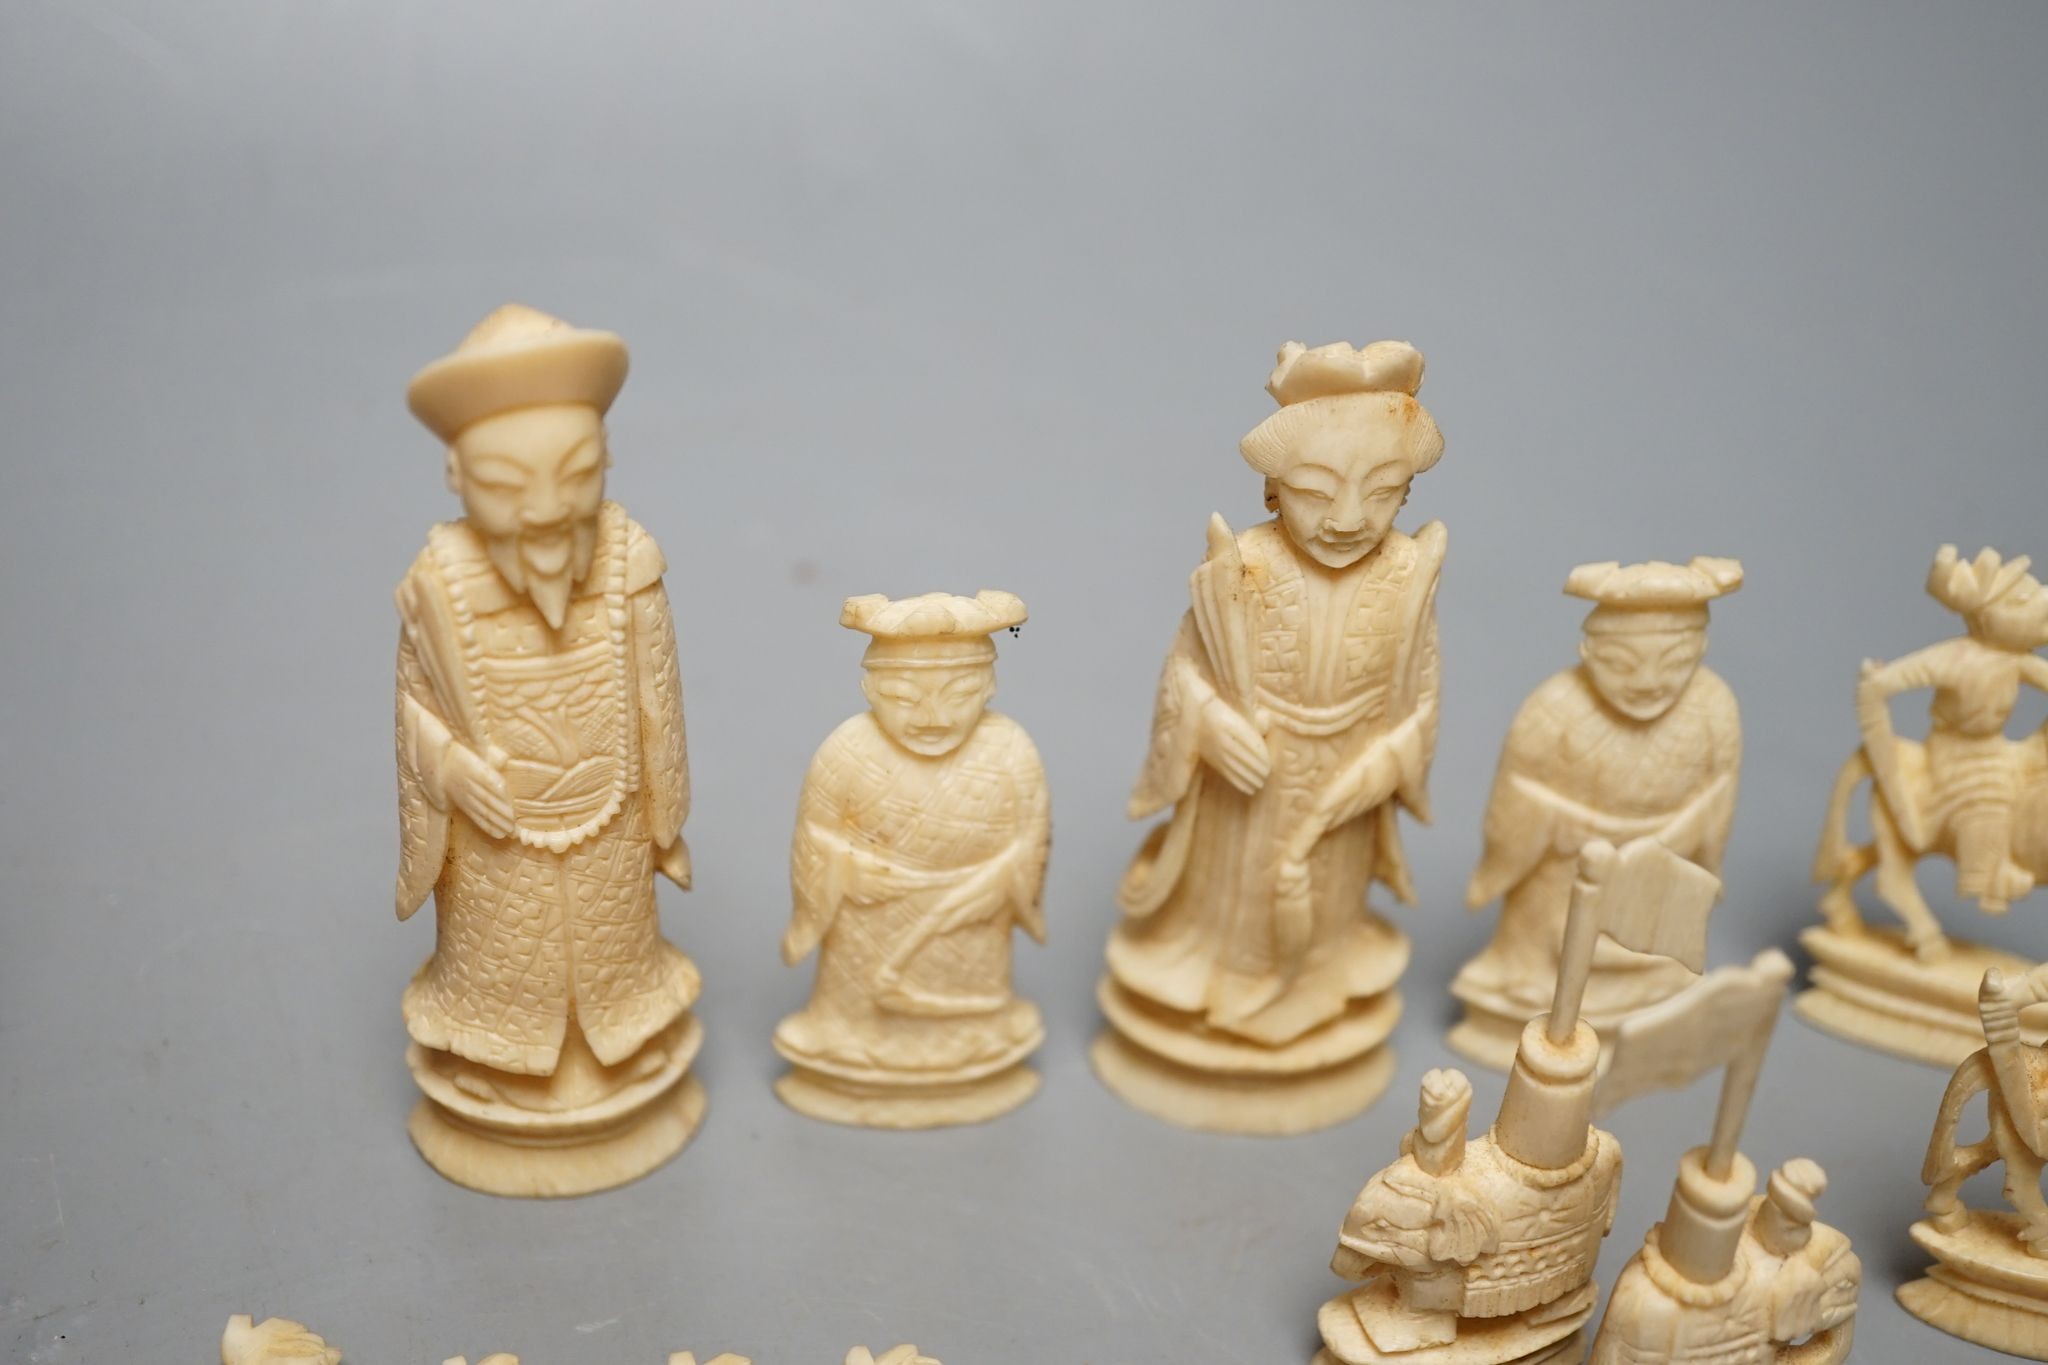 A Chinese bone chess set, Kings 9cm